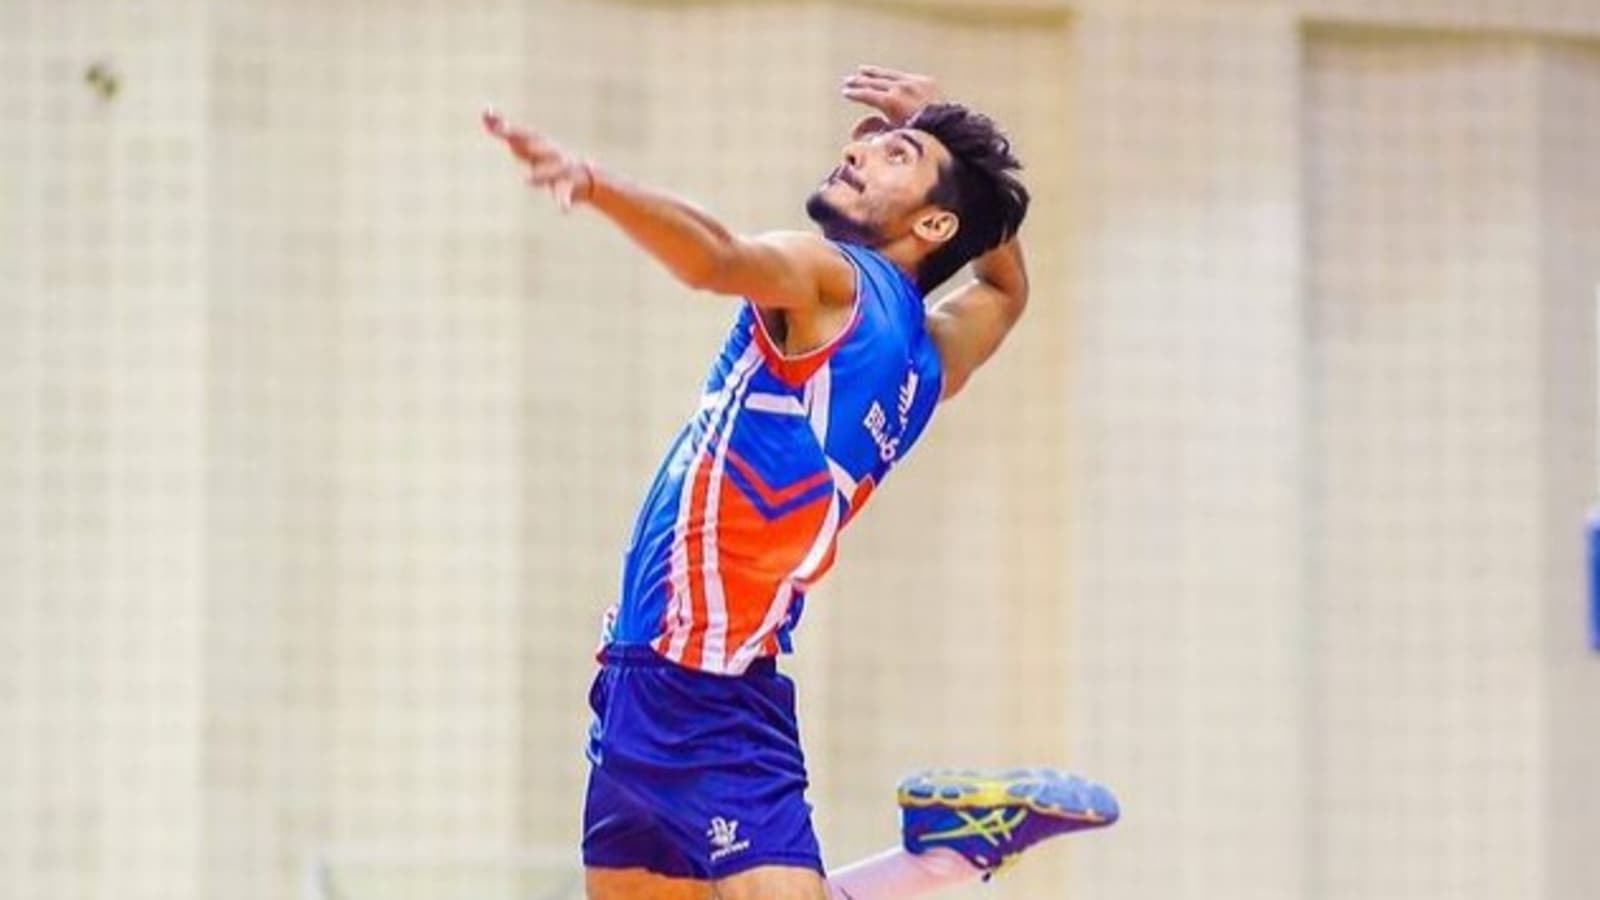 PVL will reignite interest in volleyball, says Amit Gulia ...